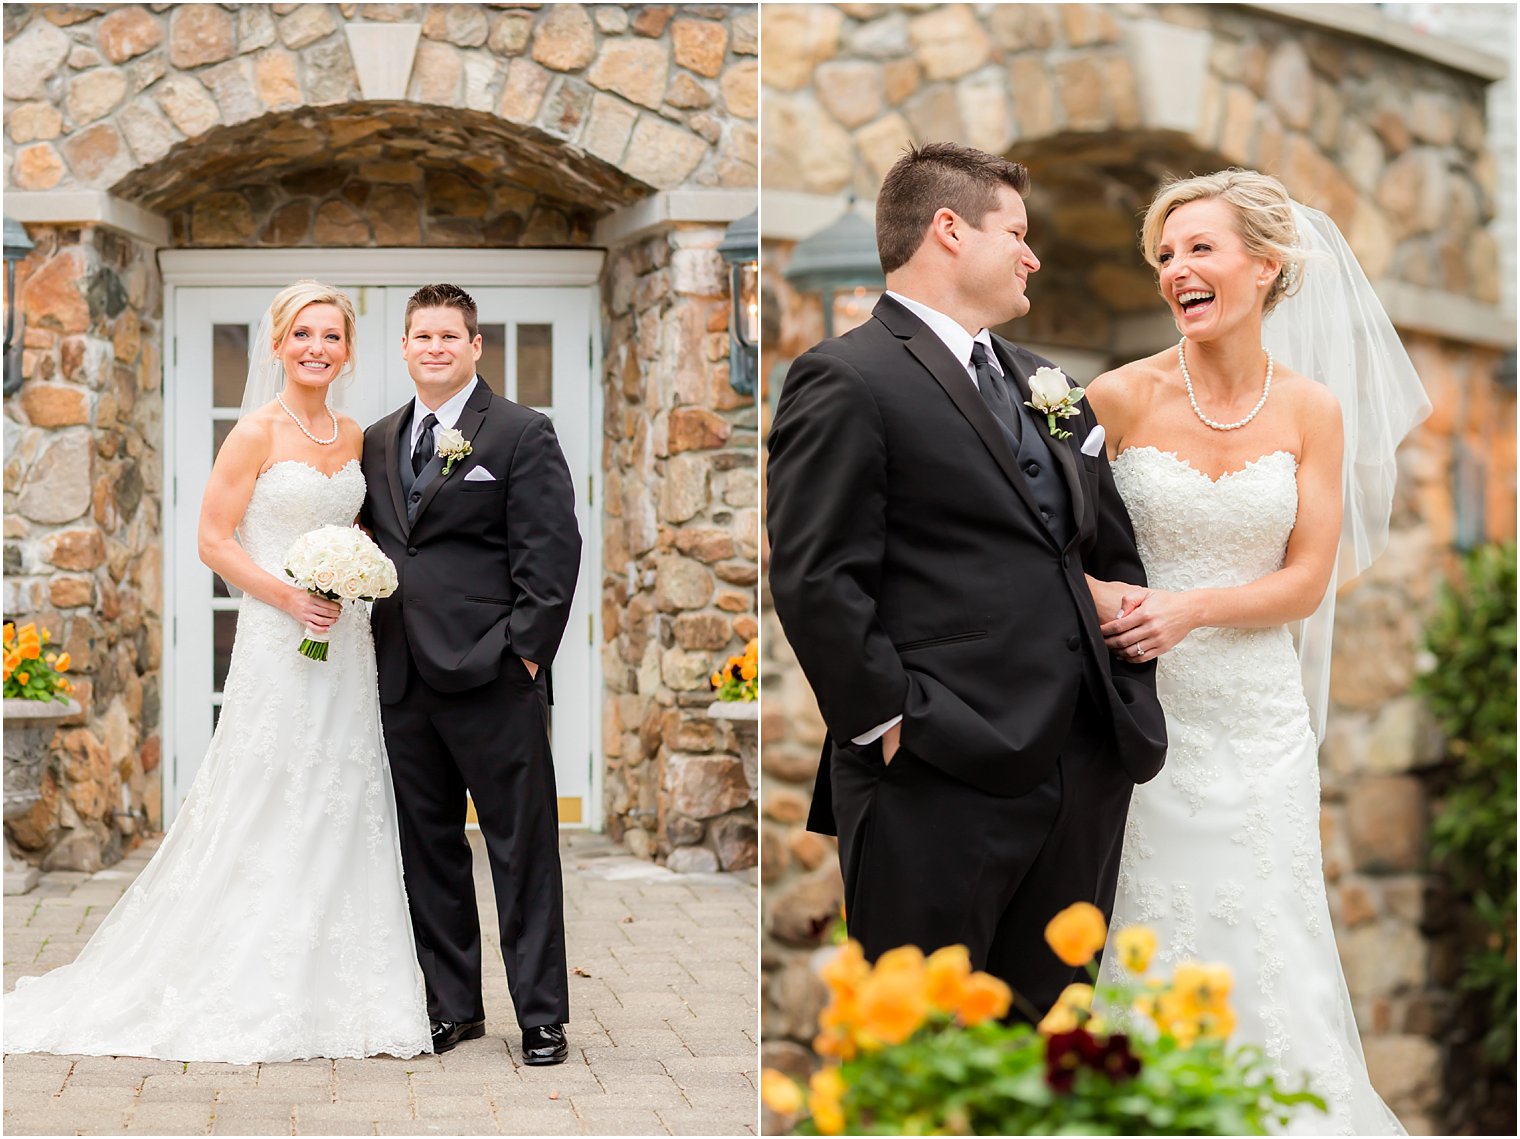 Happy bride and groom at Olde Mill Inn